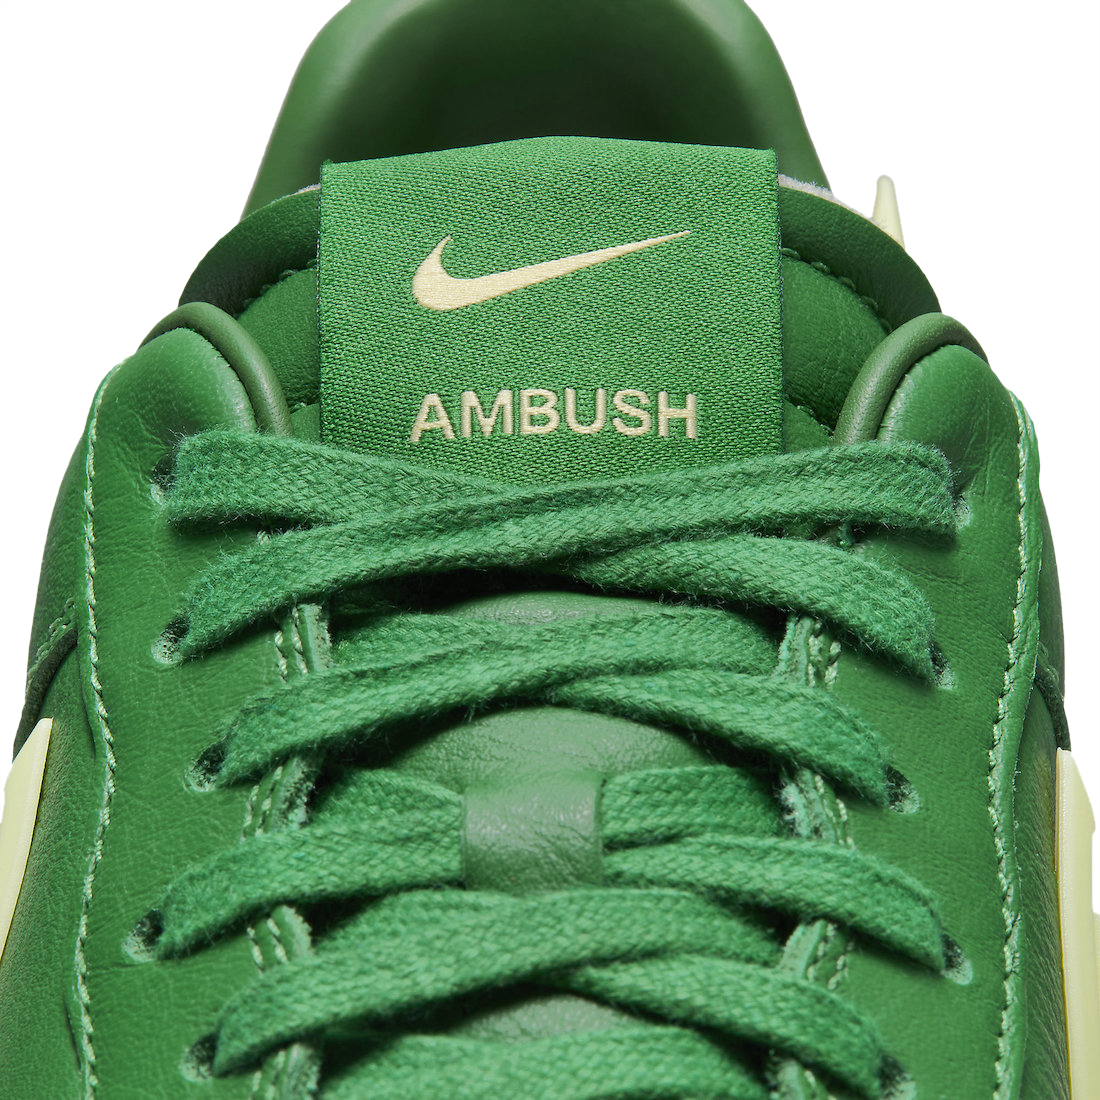 AMBUSH x Nike Air Force 1 Low Pine Green DV3464-300